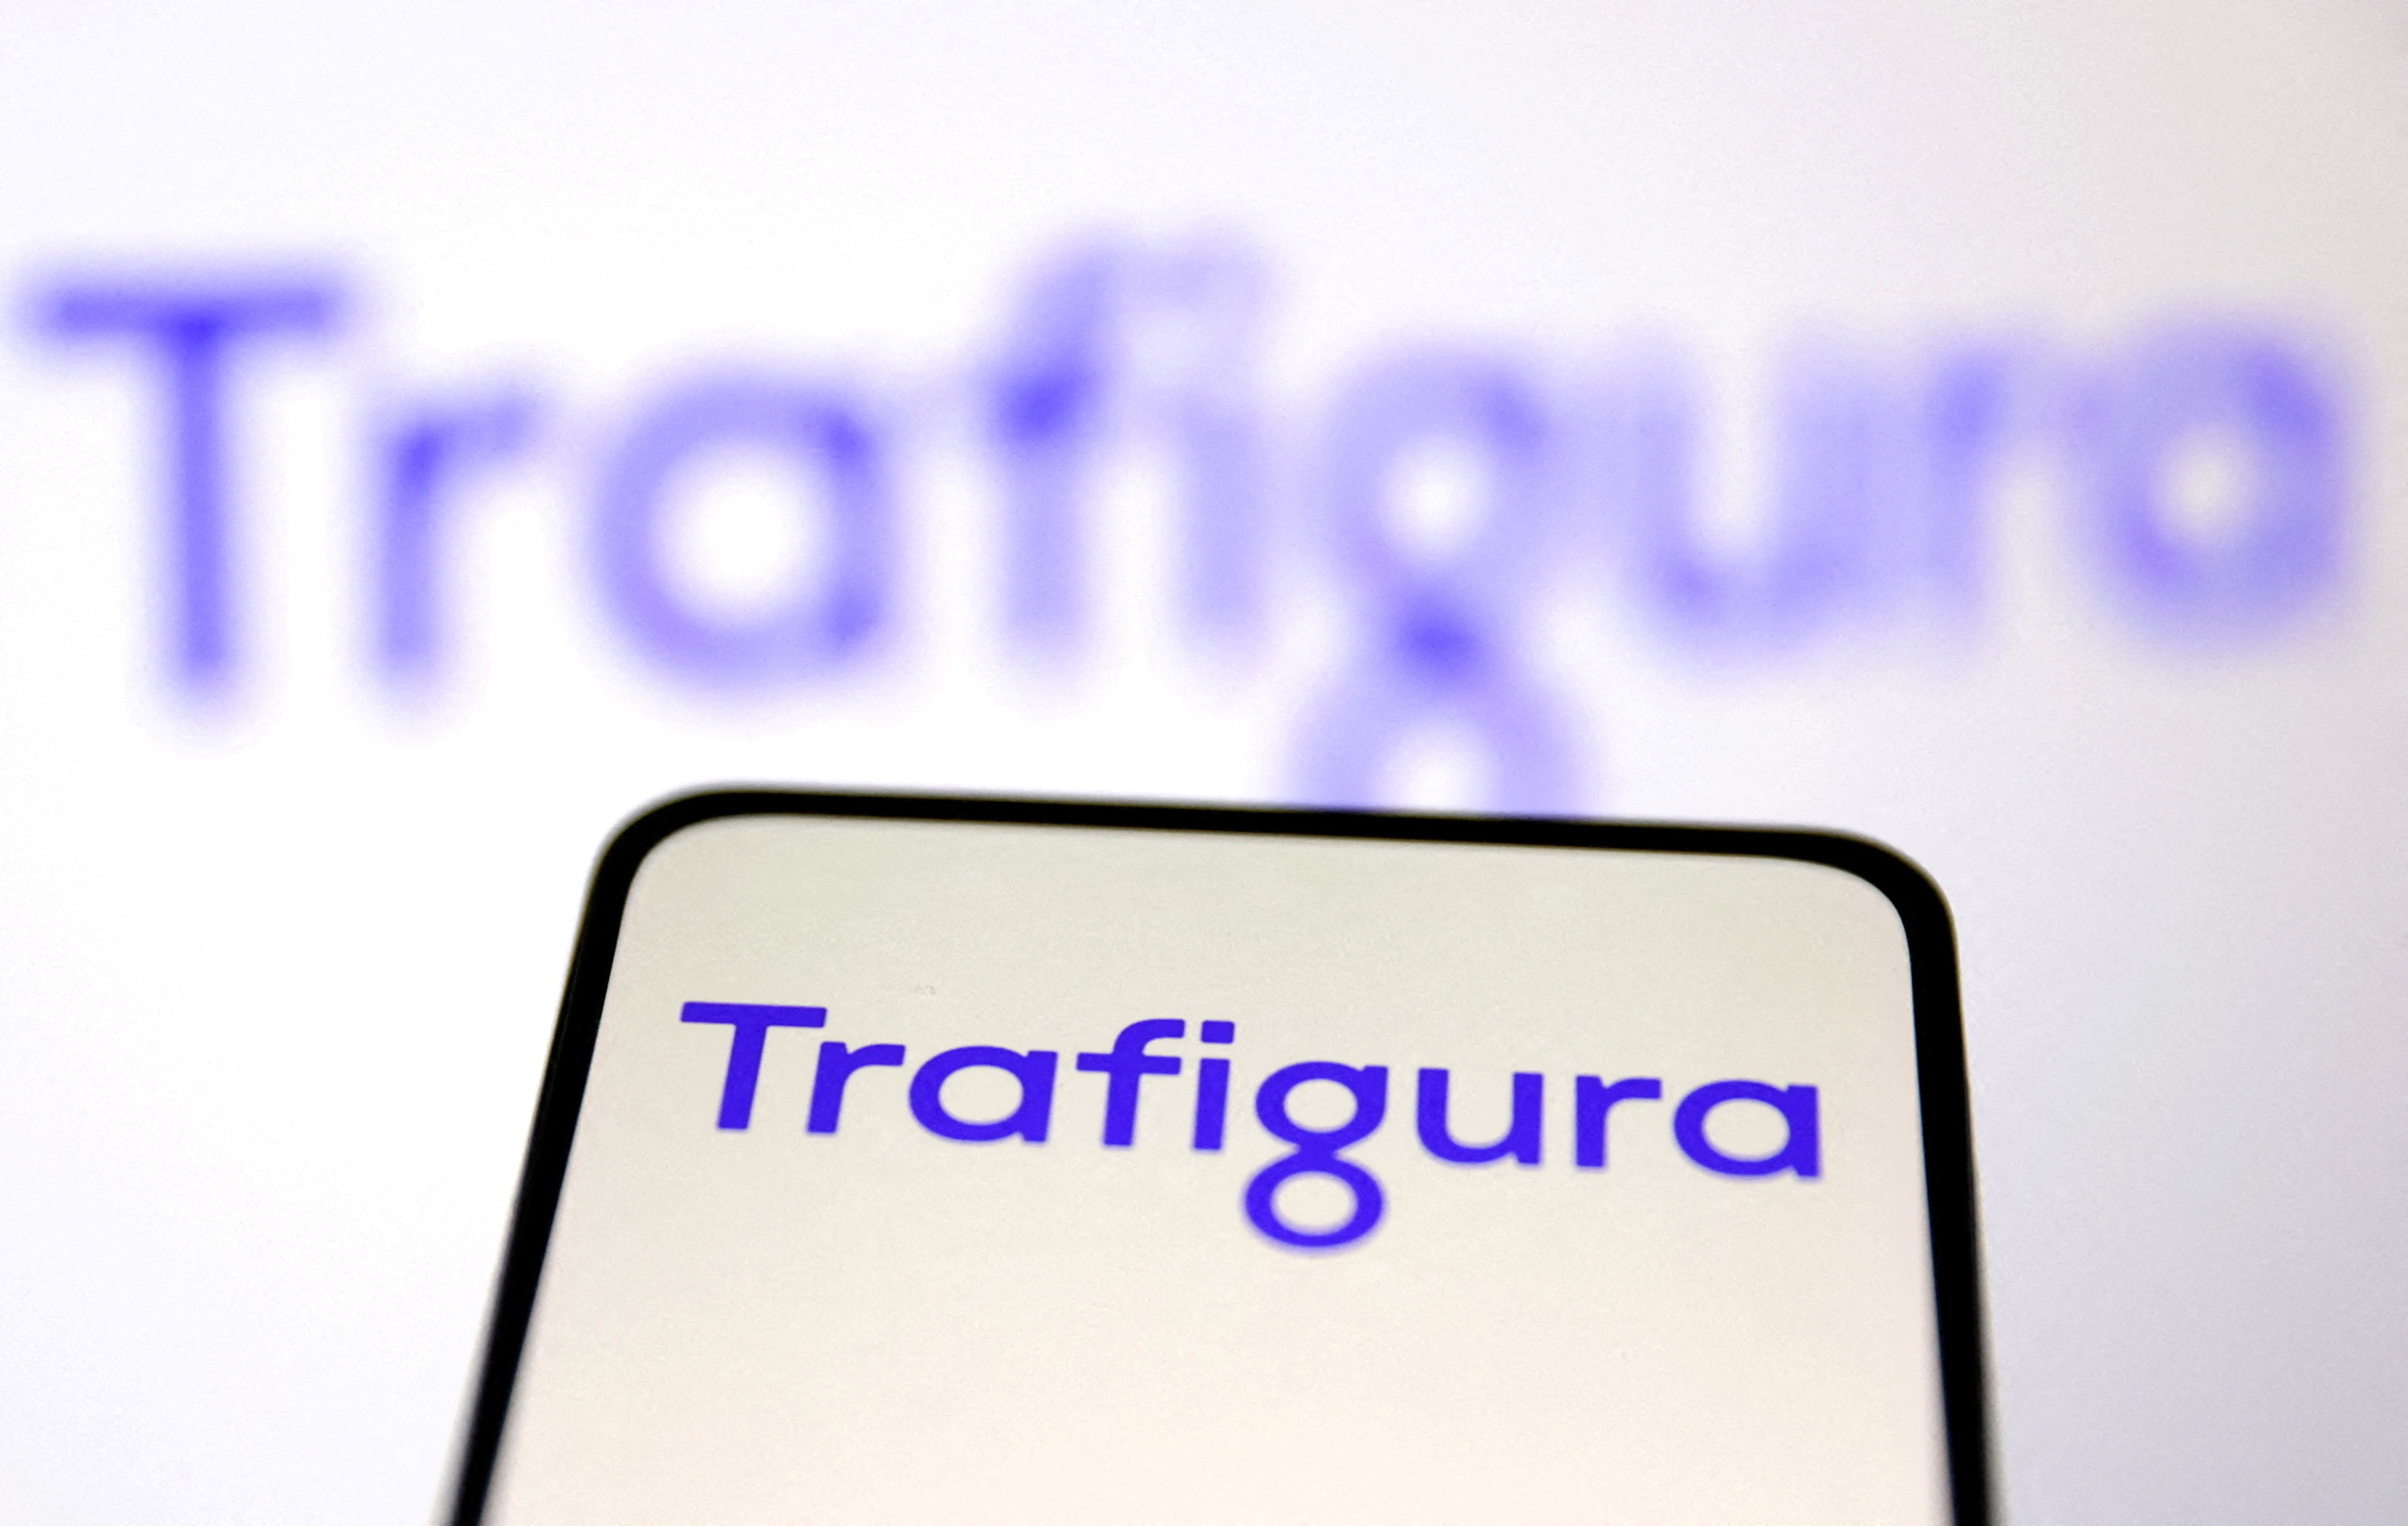 Illustration shows Trafigura logo